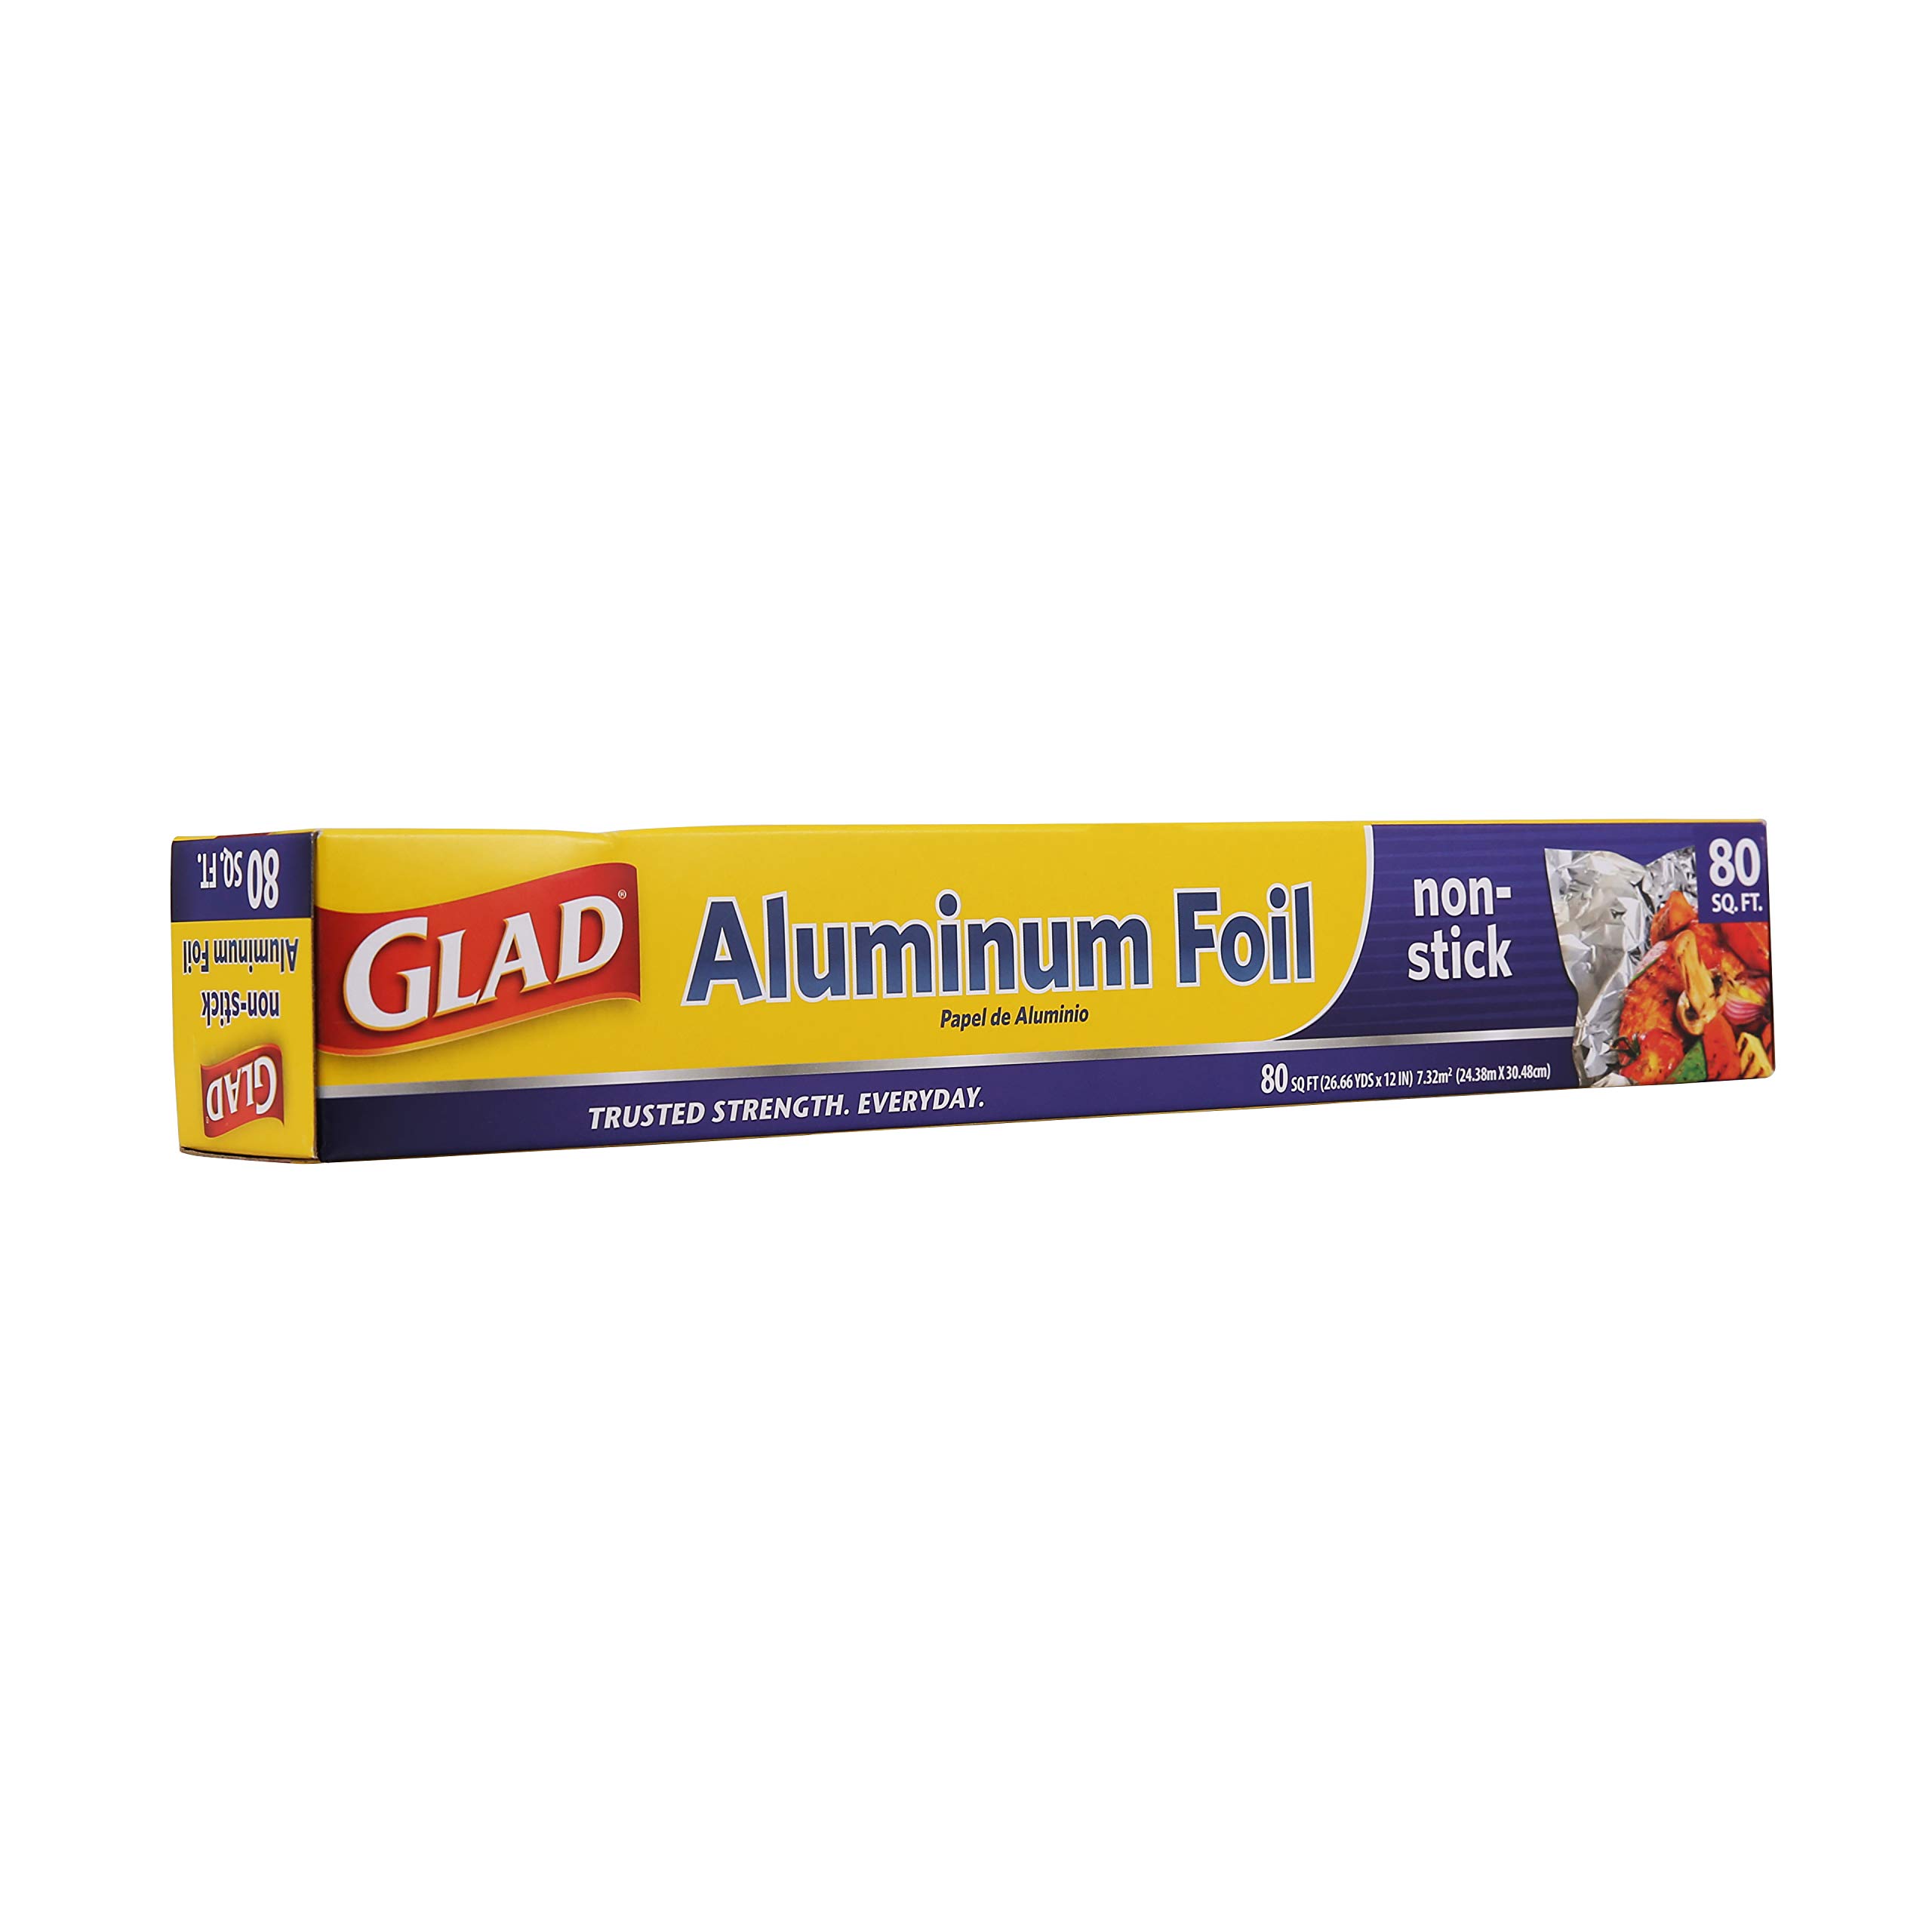 Glad Non-Stick Aluminum Foil, 80 Square Feet of Multiuse Foil for